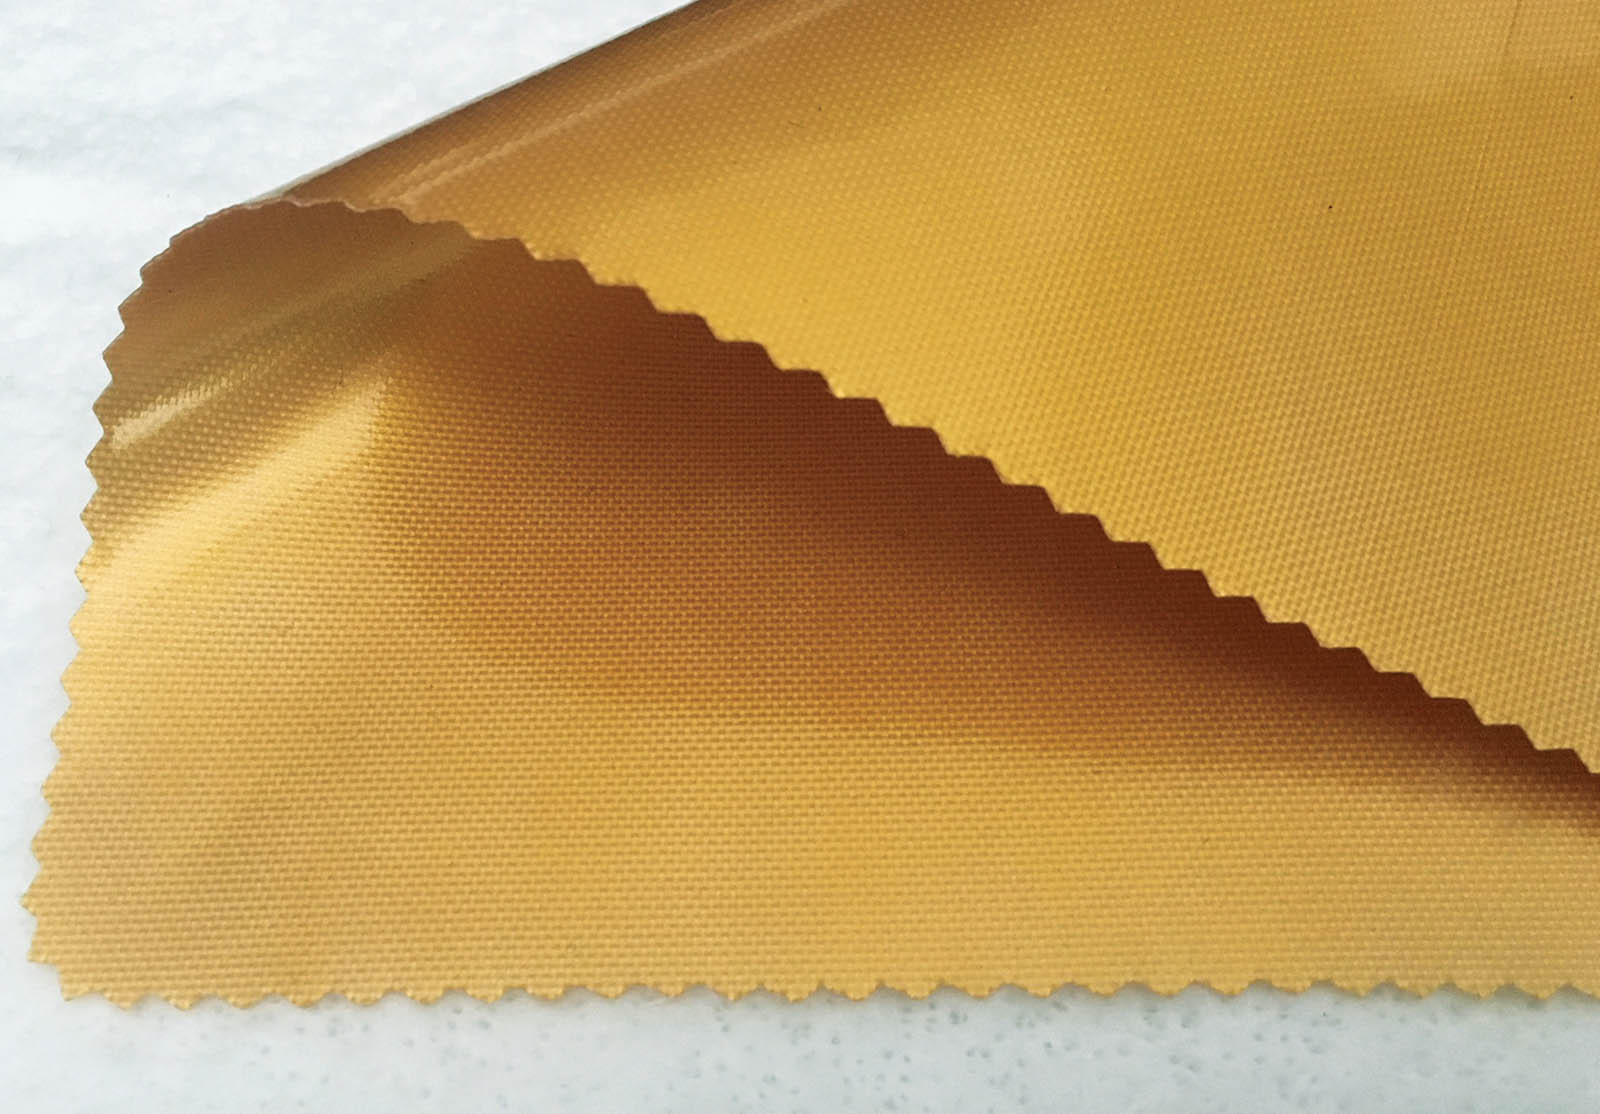 ARMATEX® X-SF 10 Gold Silicone Coated Fabric Image